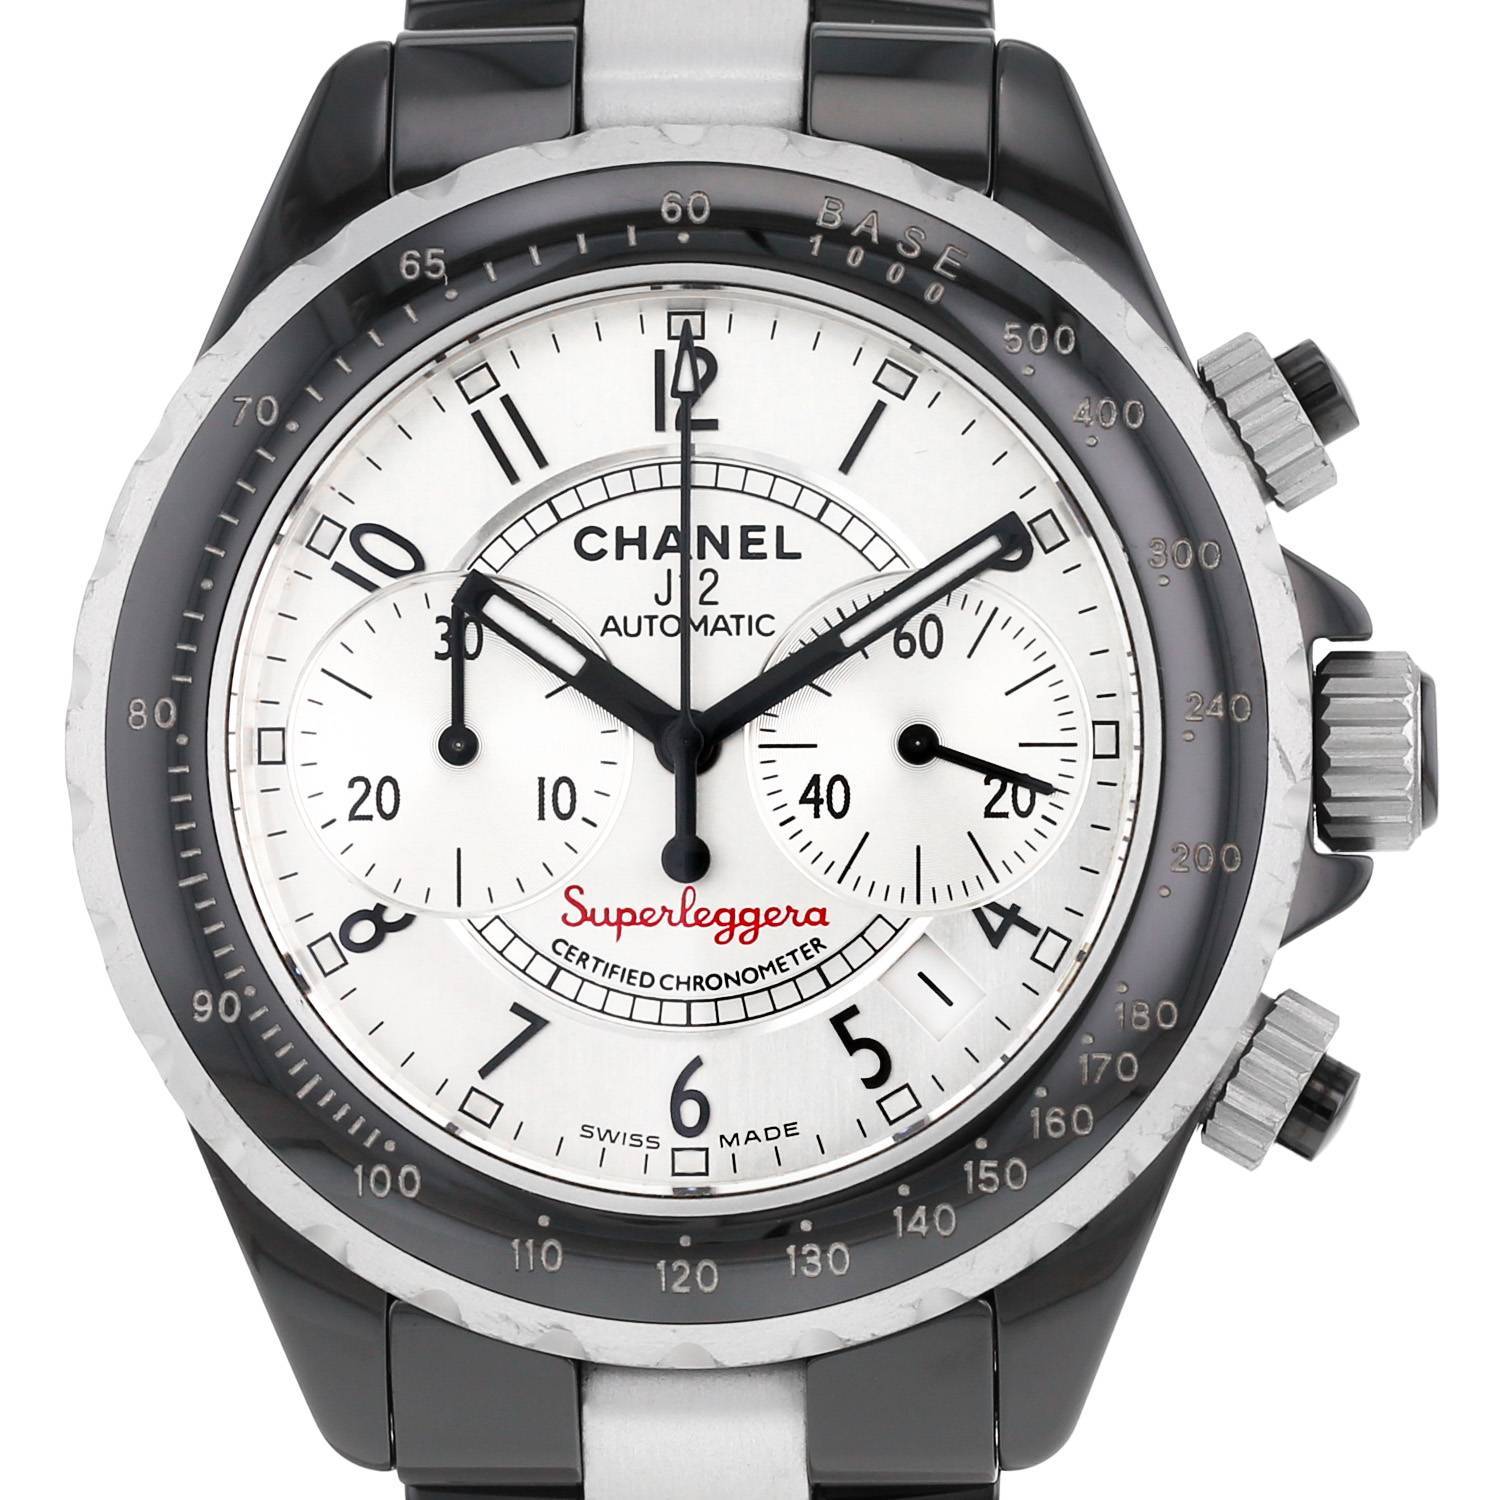 FonjepShops | Chanel J12 Chronographe Sport Watch 403427 | Chanel 